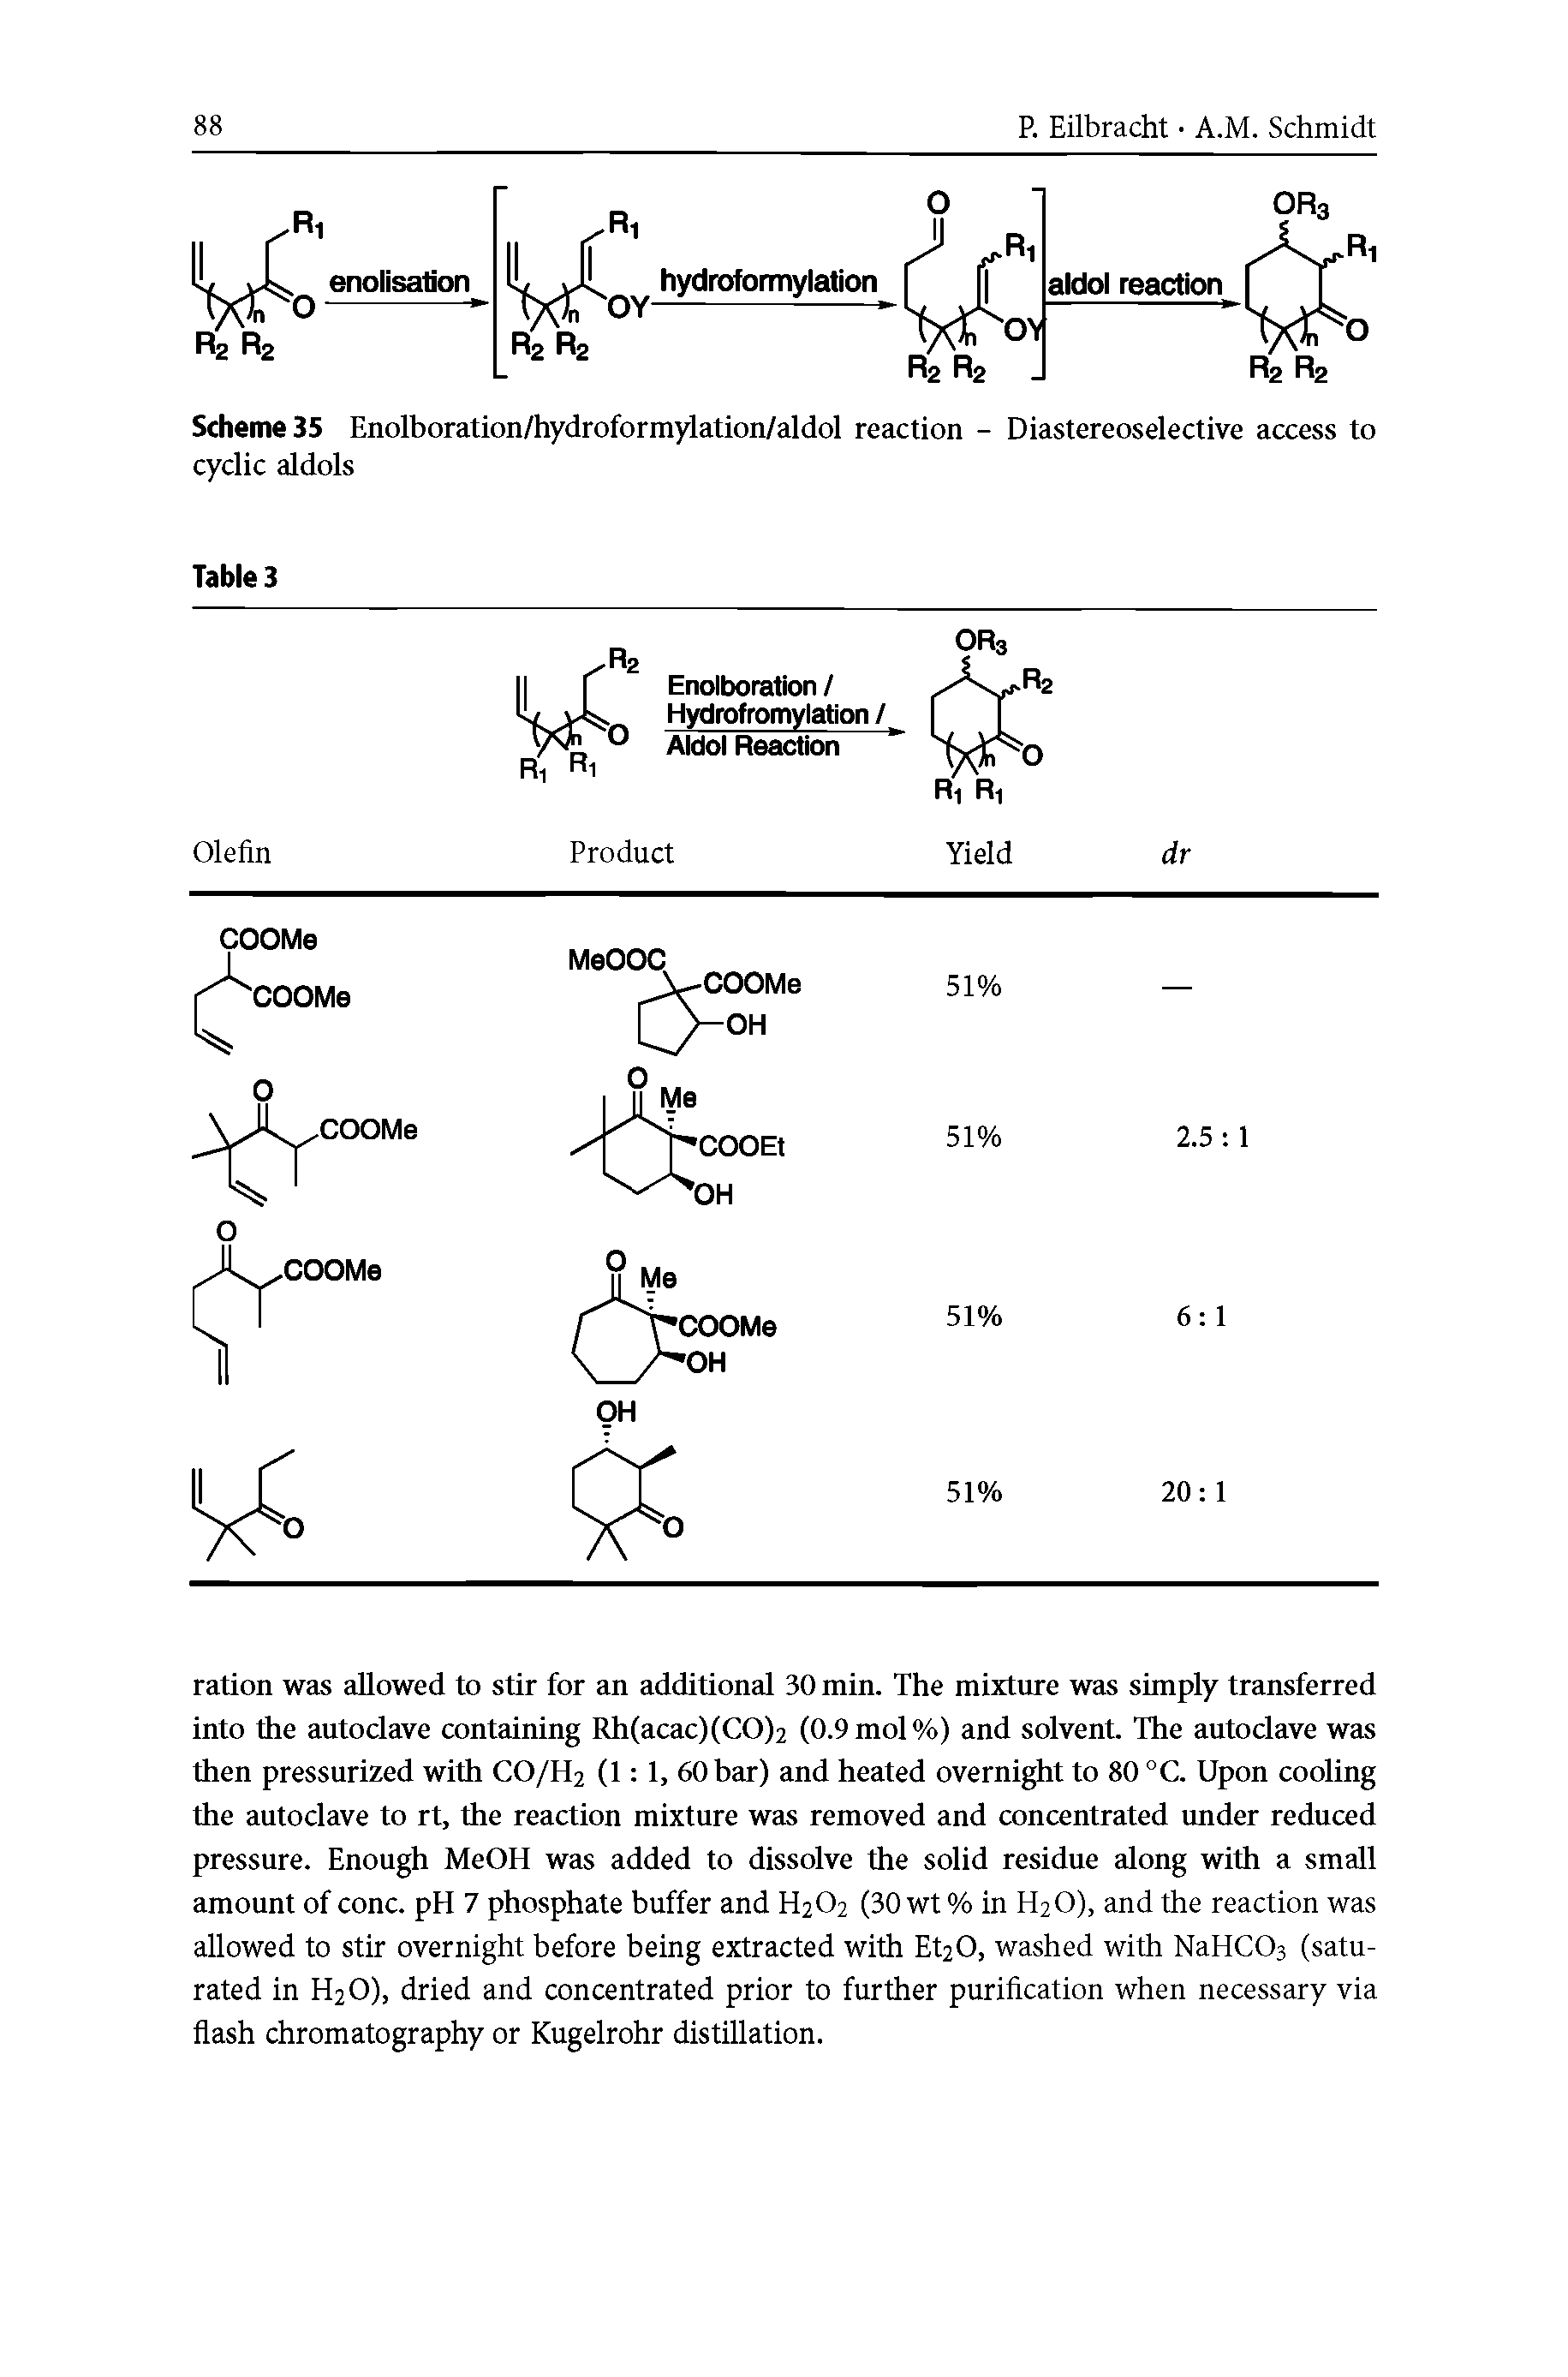 Scheme 35 Enolboration/hydroformylation/aldol reaction - Diastereoselective access to cyclic aldols...